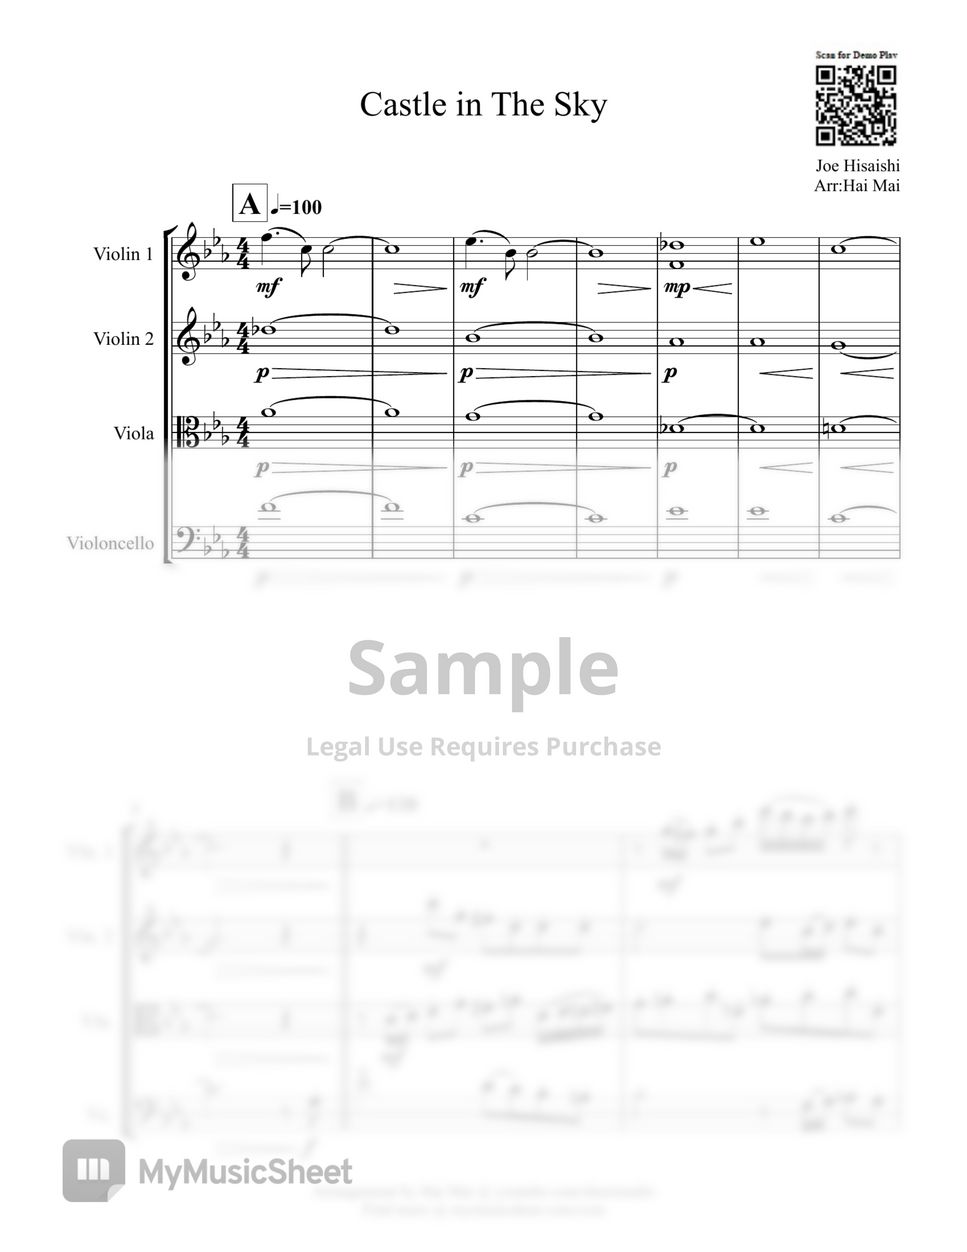 Joe Hisaishi - Laputa:Castle in The Sky for String Quartet by Hai Mai